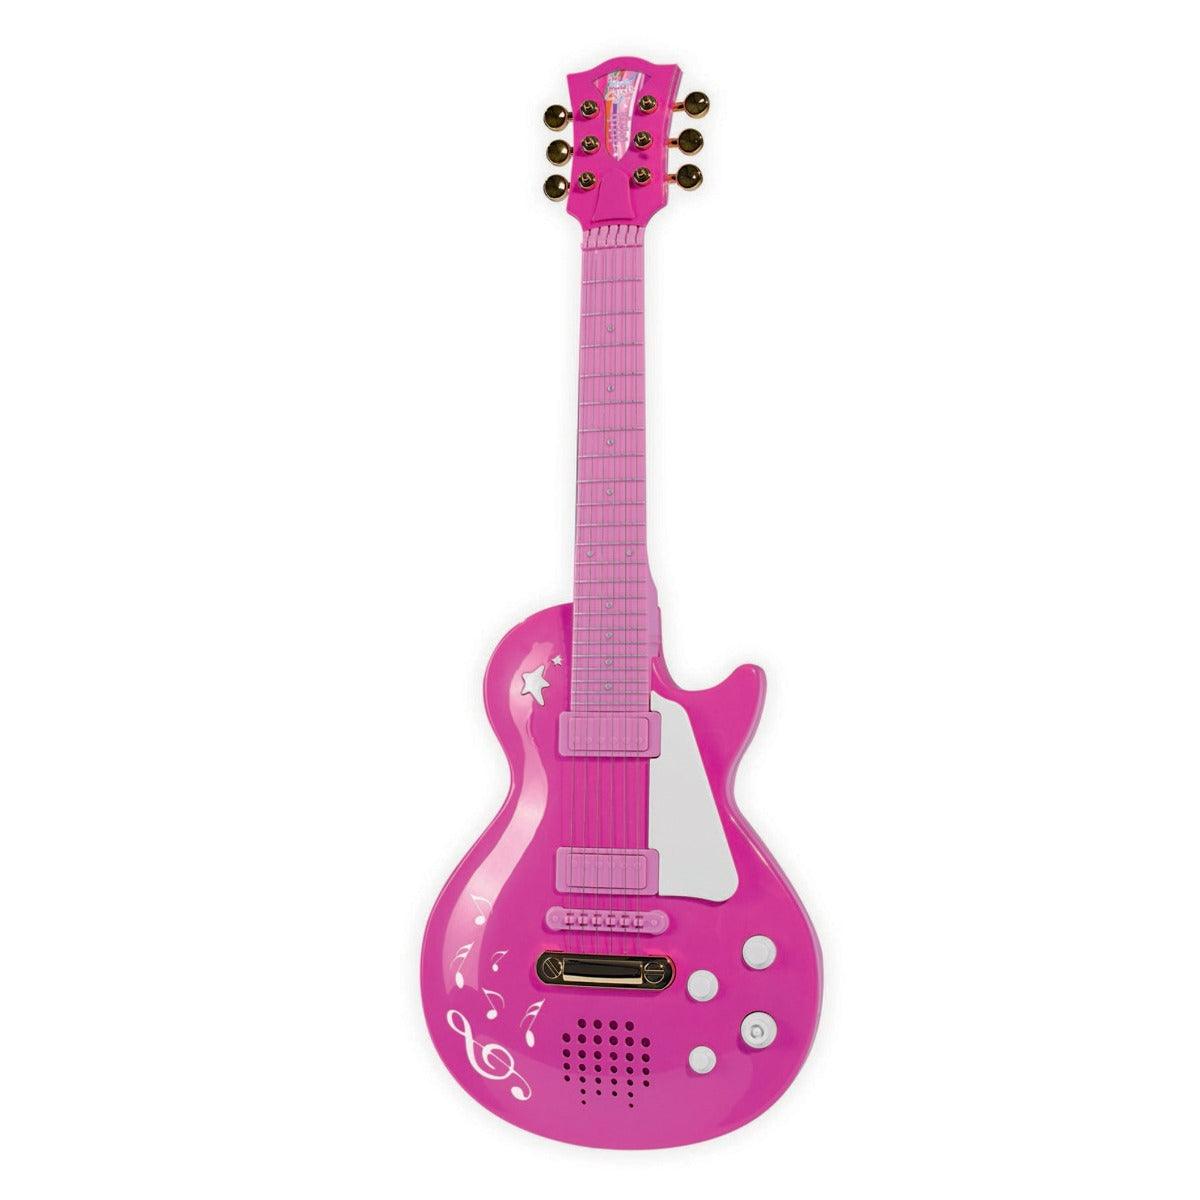 Simba My Music World Girls Rock Guitar (Pink)